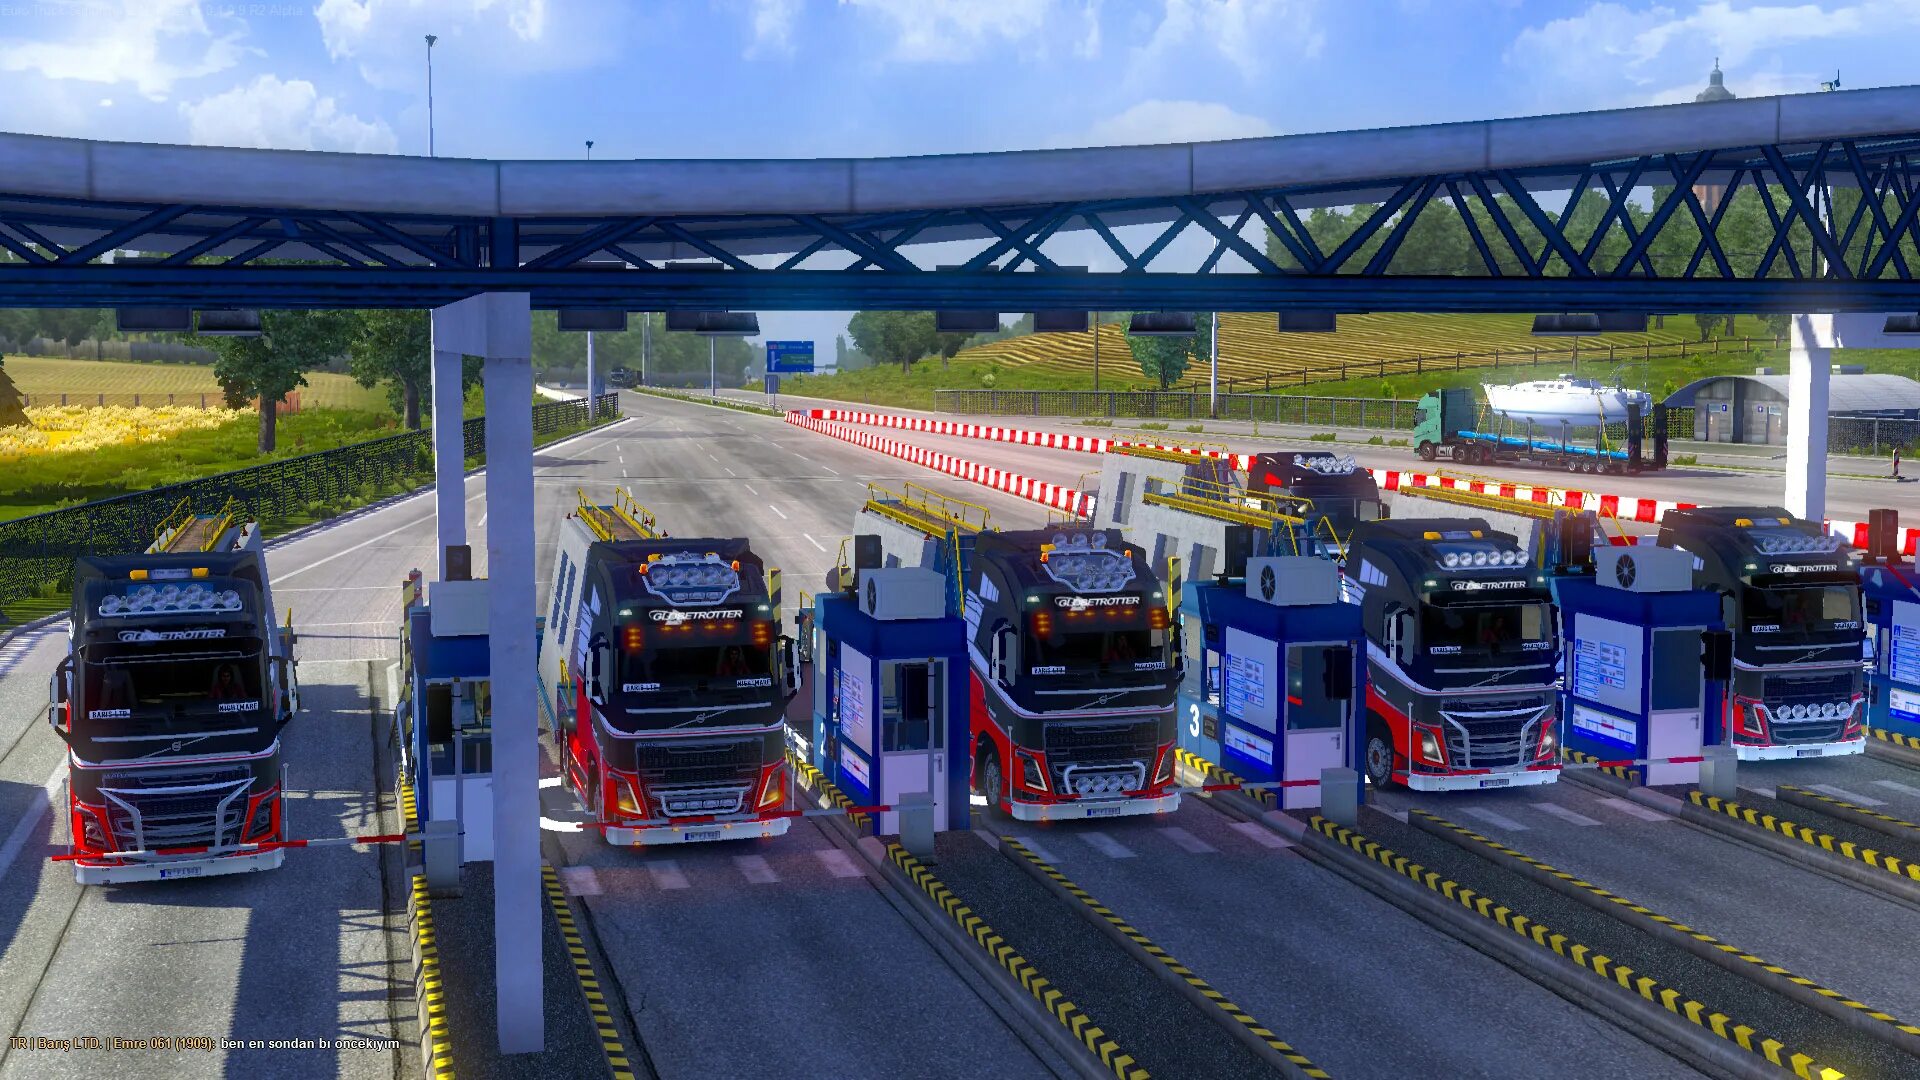 Механик трак симулятор 2. Евро трак симулятор 2. Евро Truck Simulator 2. Euro track simulztor 2. Евро трак симулятор 2020.